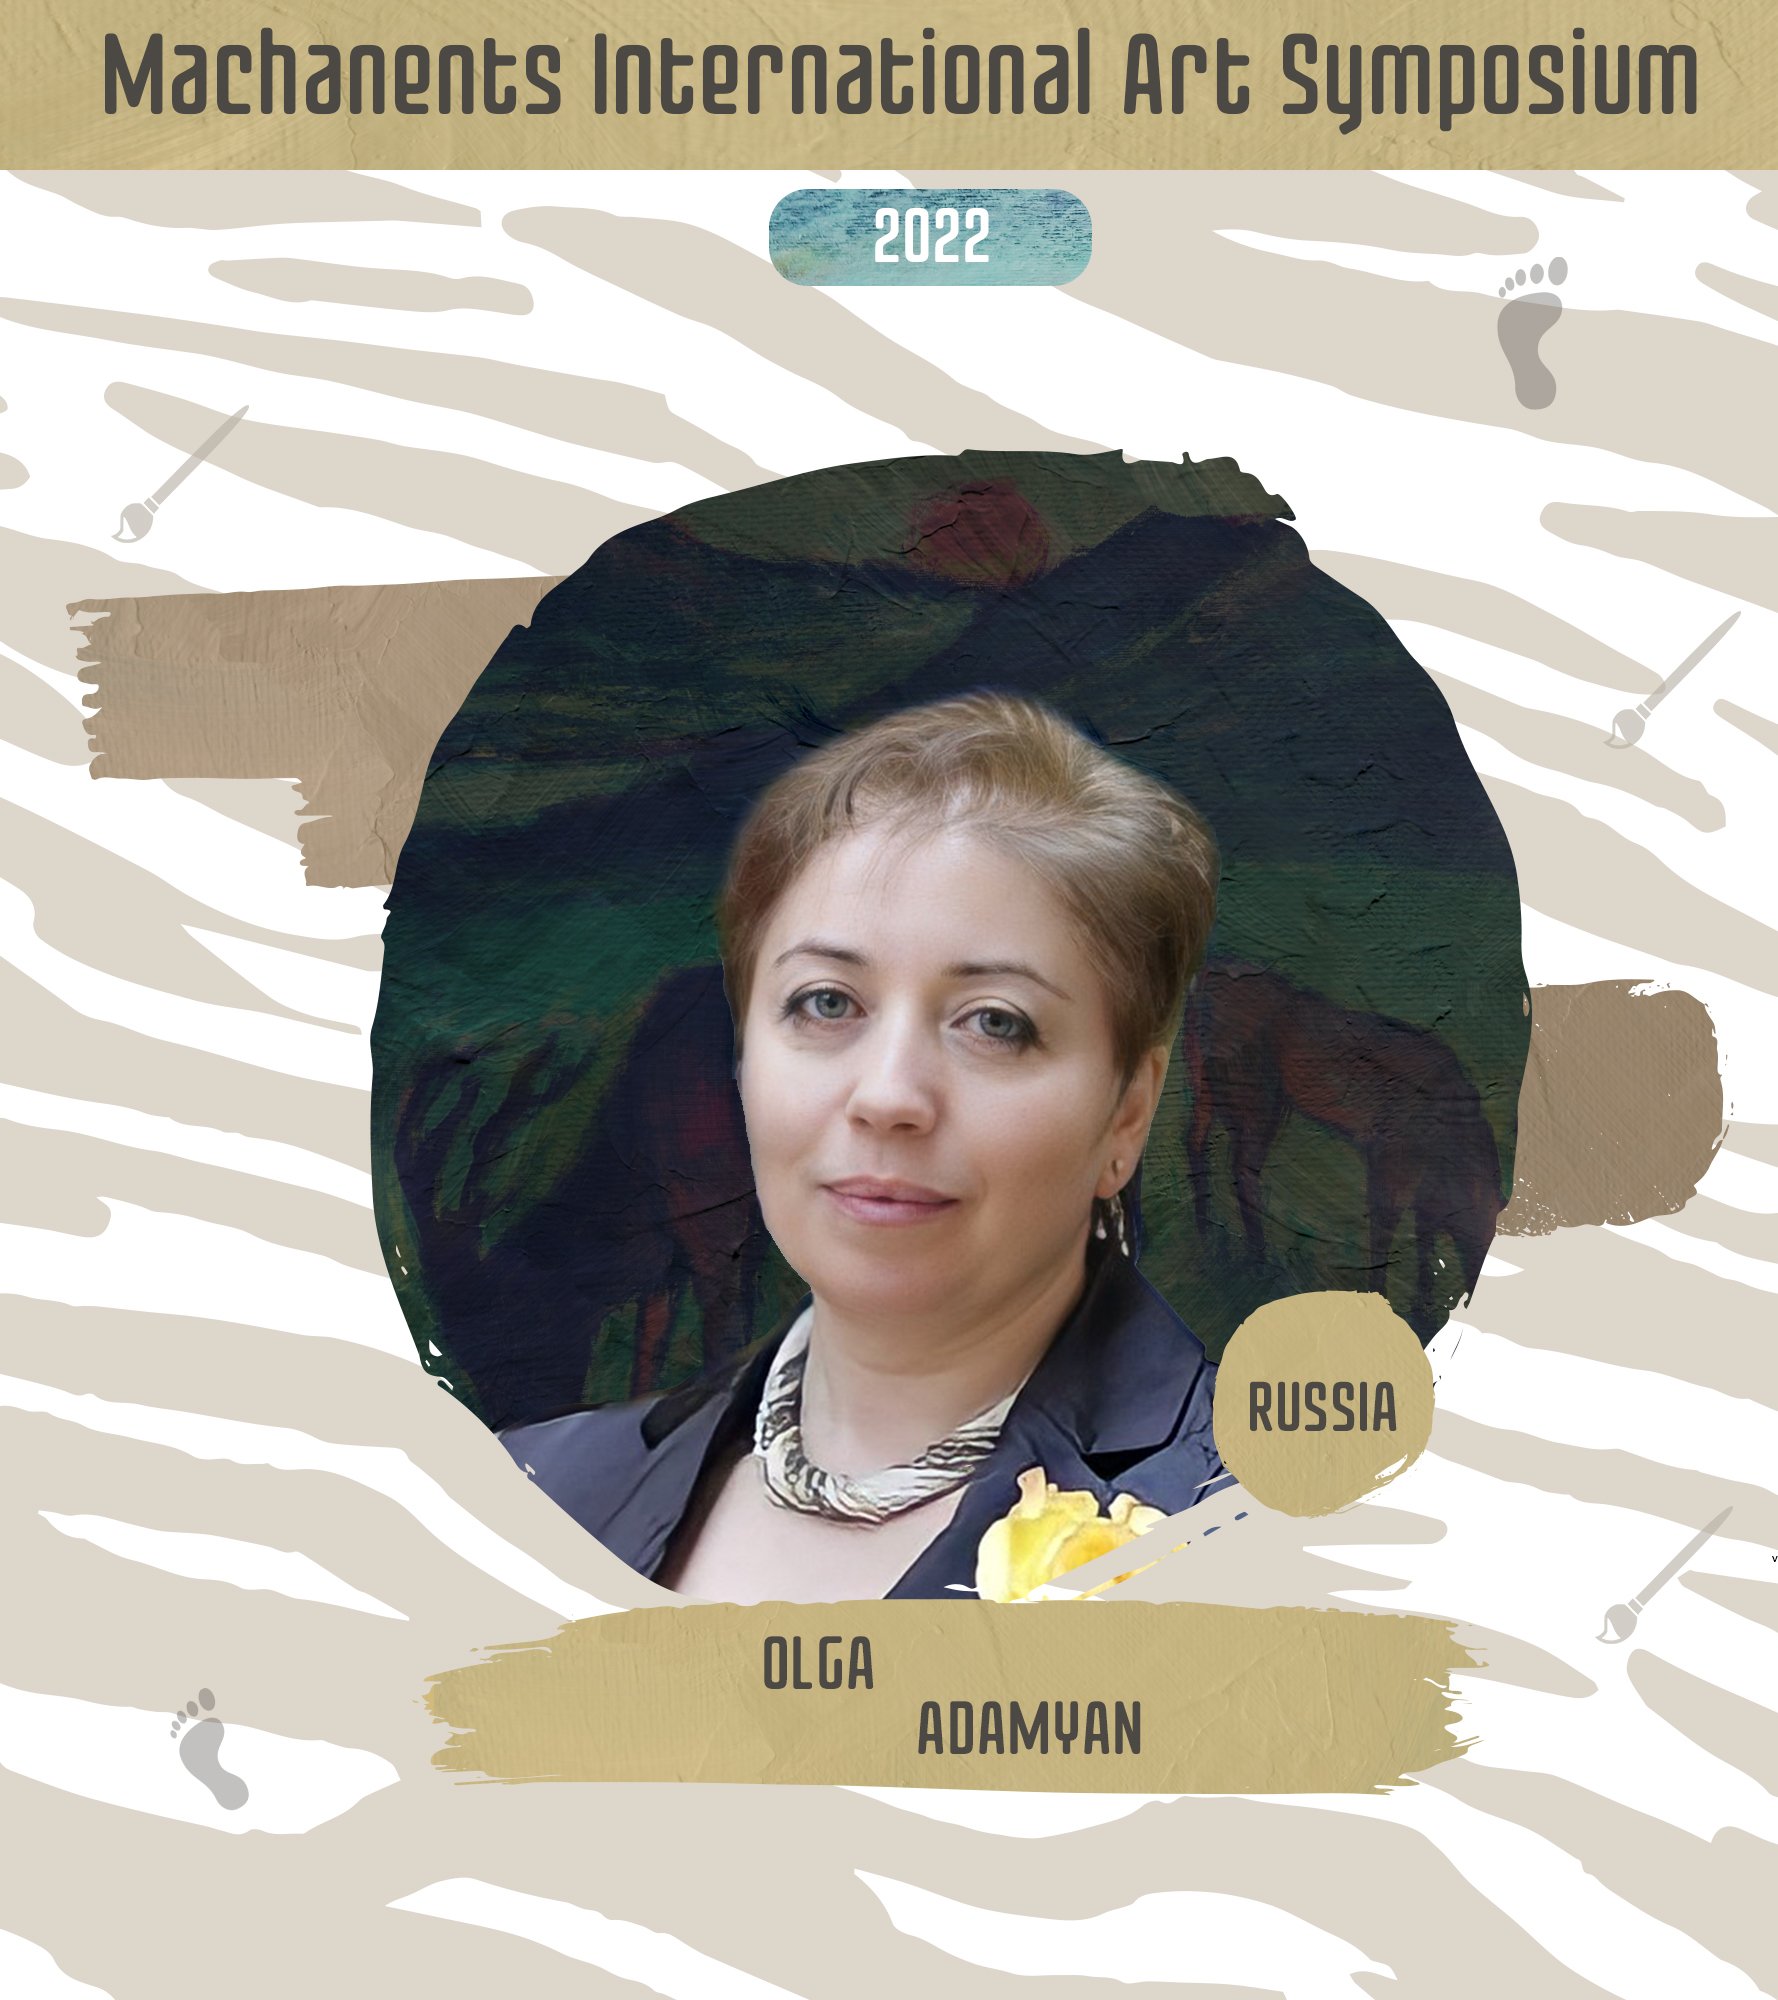 Olga Adamyan